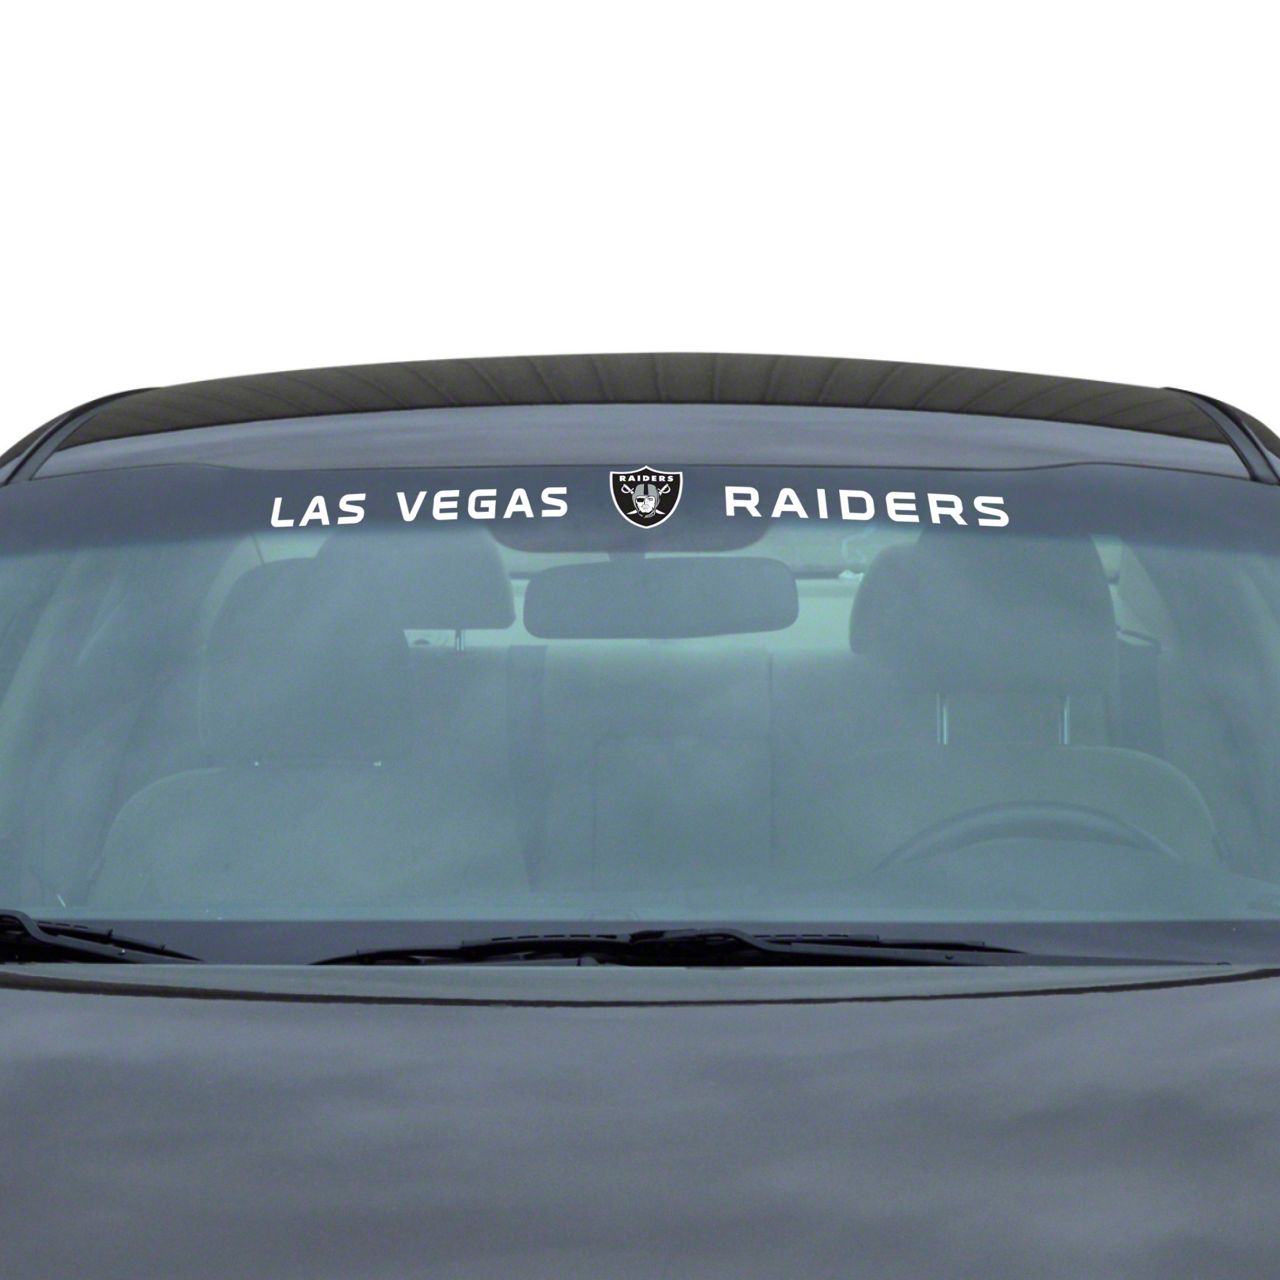 Las Vegas Raiders Stickers, Decals & Bumper Stickers